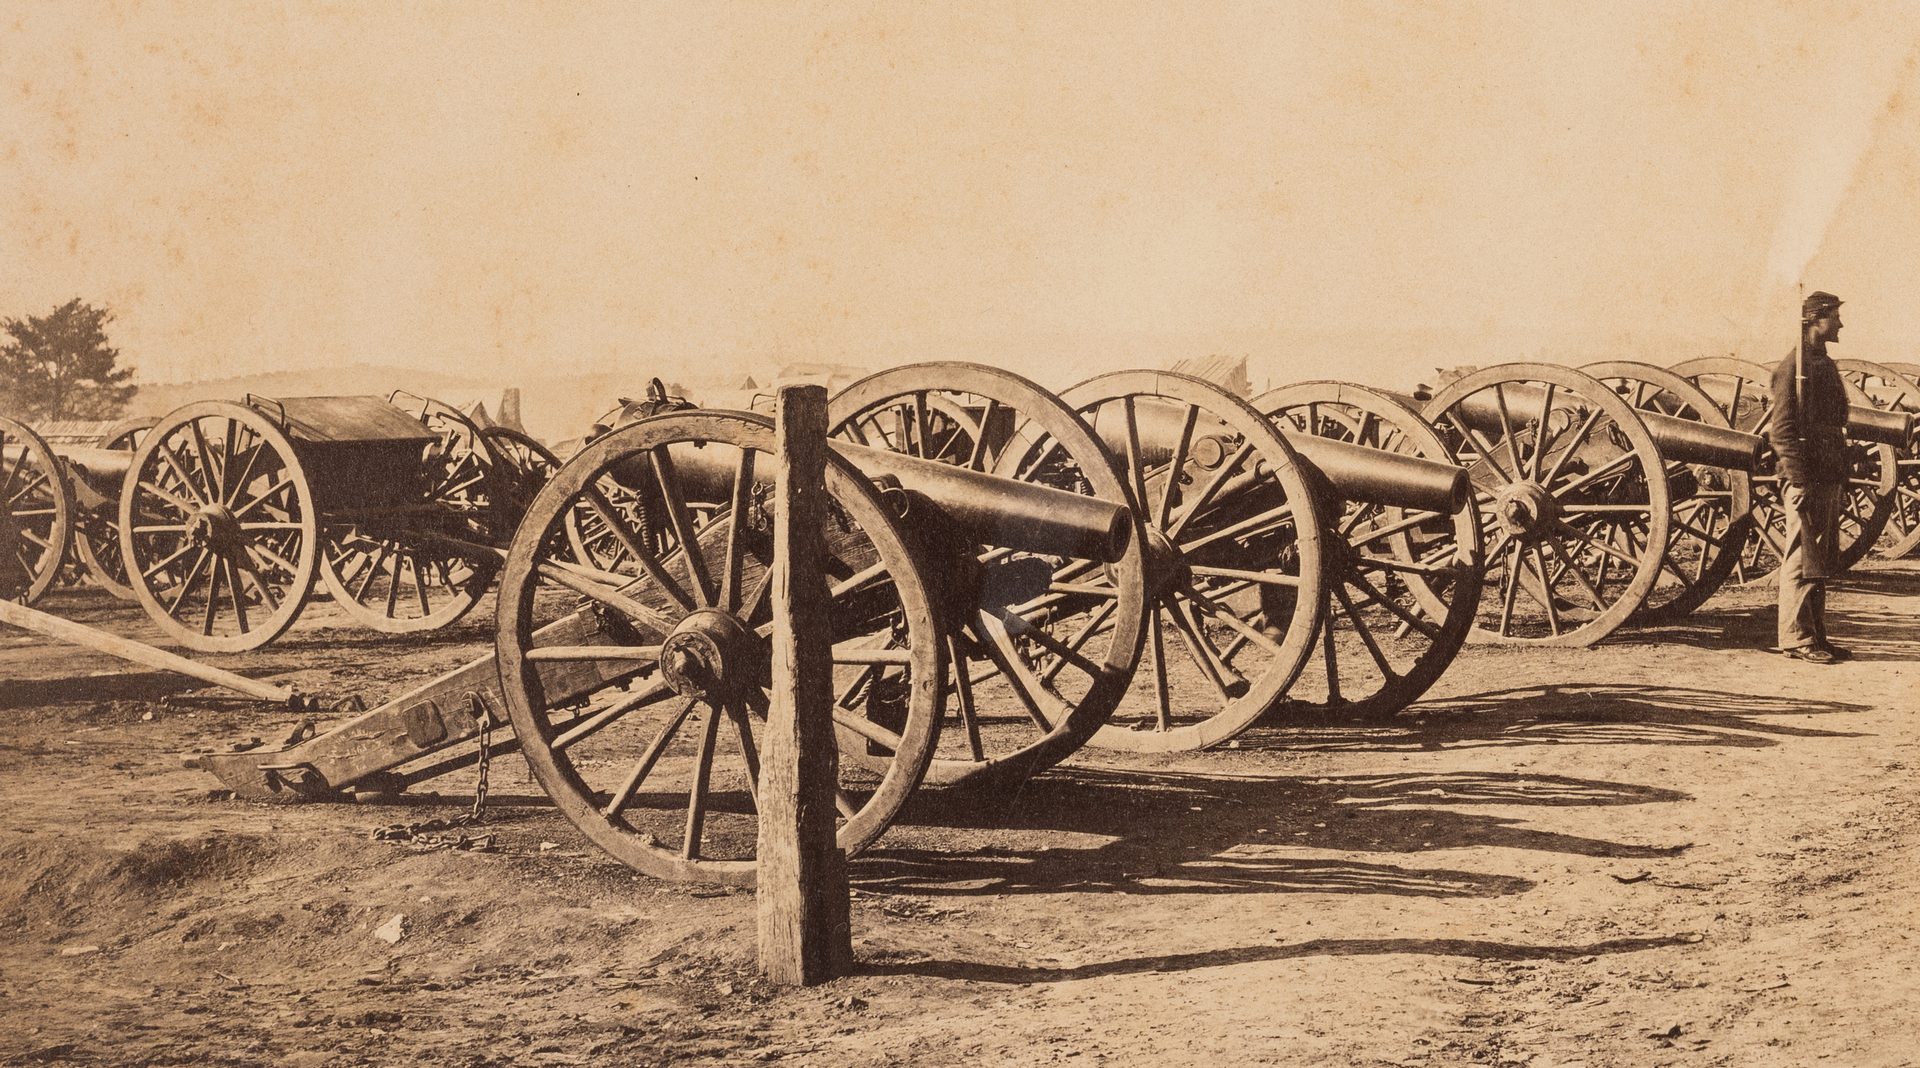 Lot 518: Civil War Photograph, Battle of Chattanooga